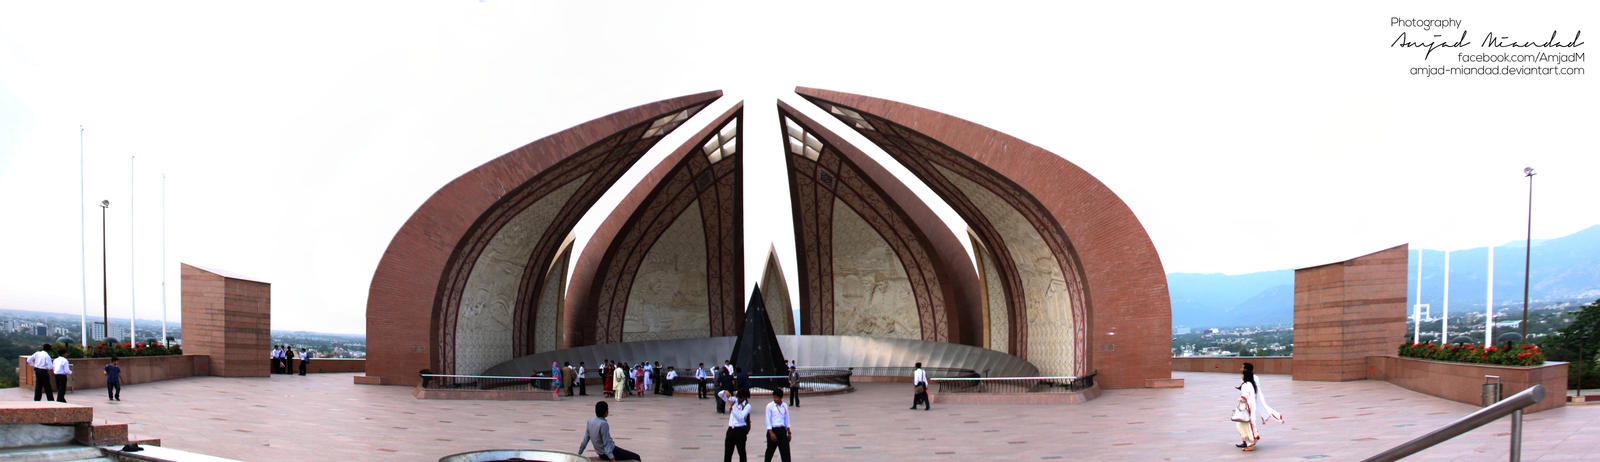 pakistan_monument_by_amjad_miandad-d6shtmp.jpg